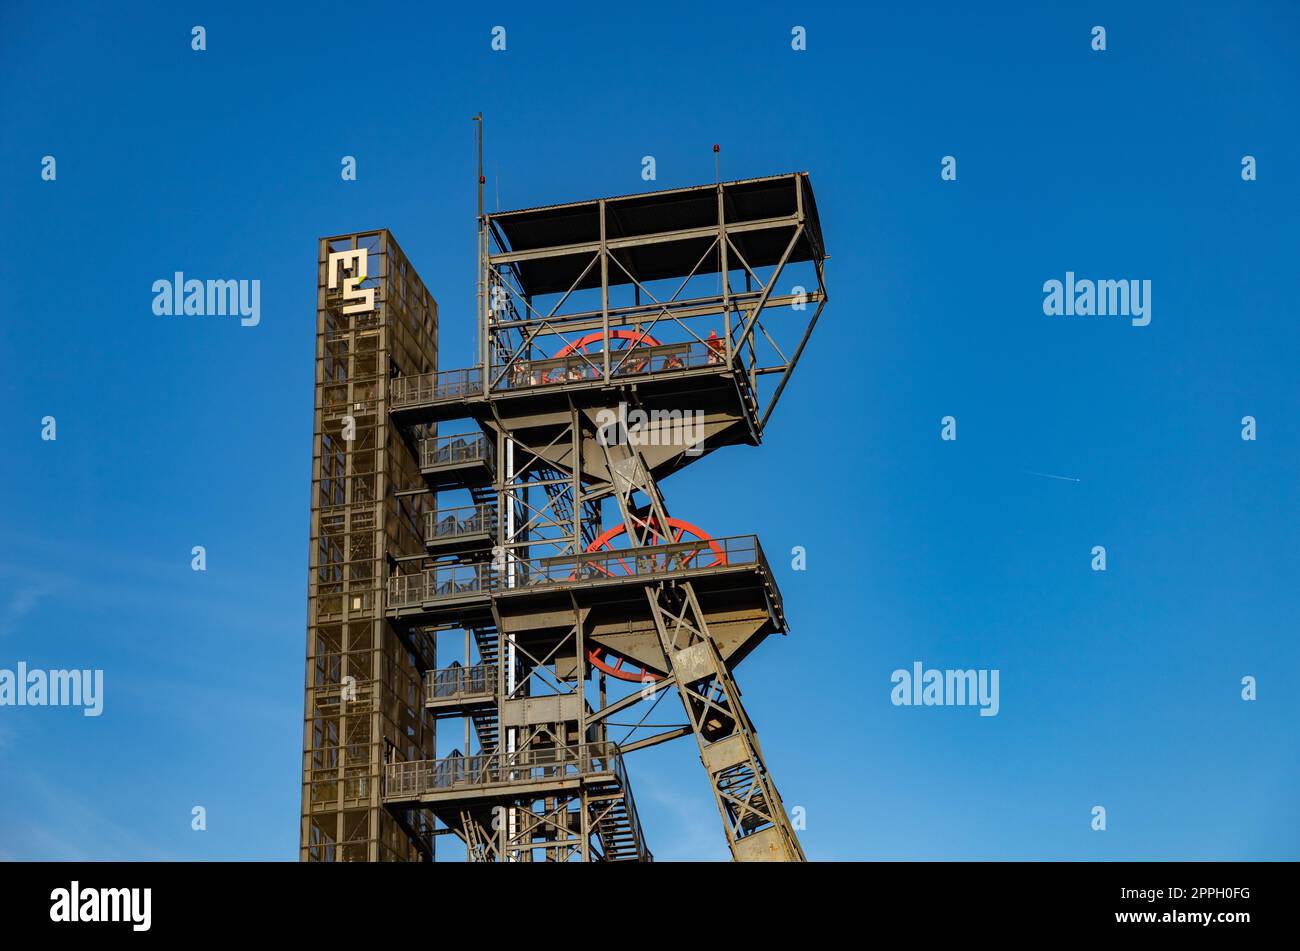 Albero della torre - Warszawa II Foto Stock